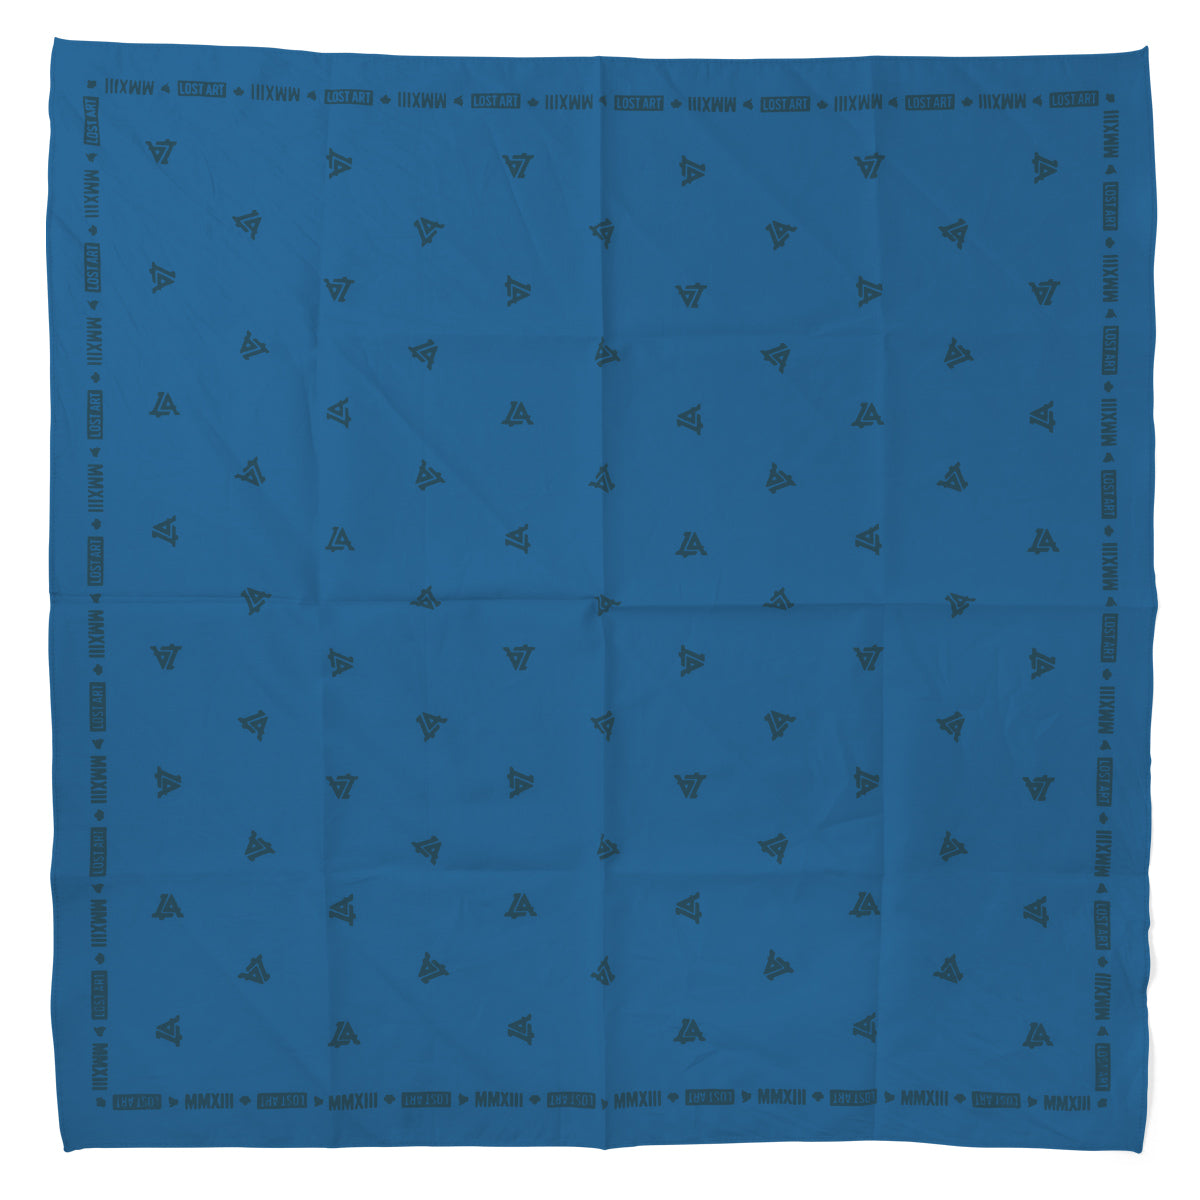 Lost Art Canada - blue coloured bandana top view